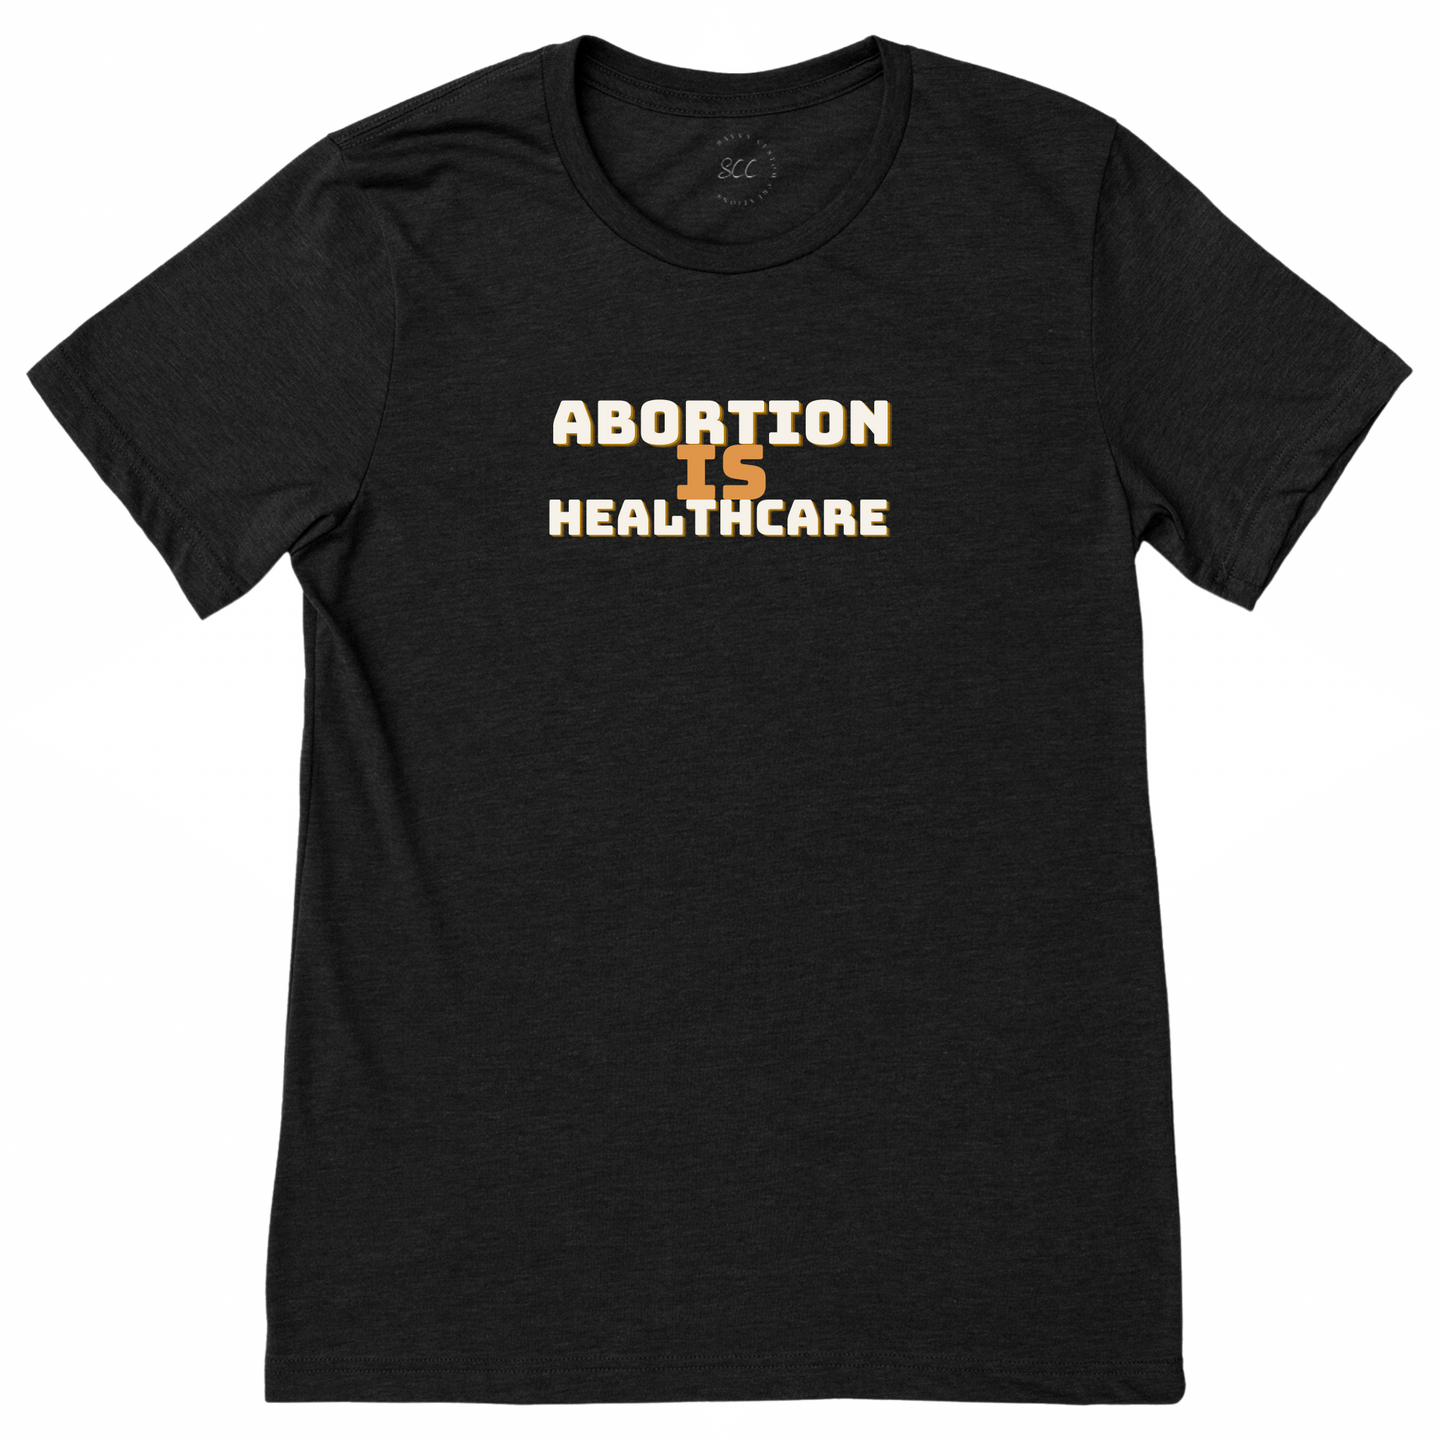 ABORTION IS HEALTHCARE - Unisex Crewneck T-Shirt